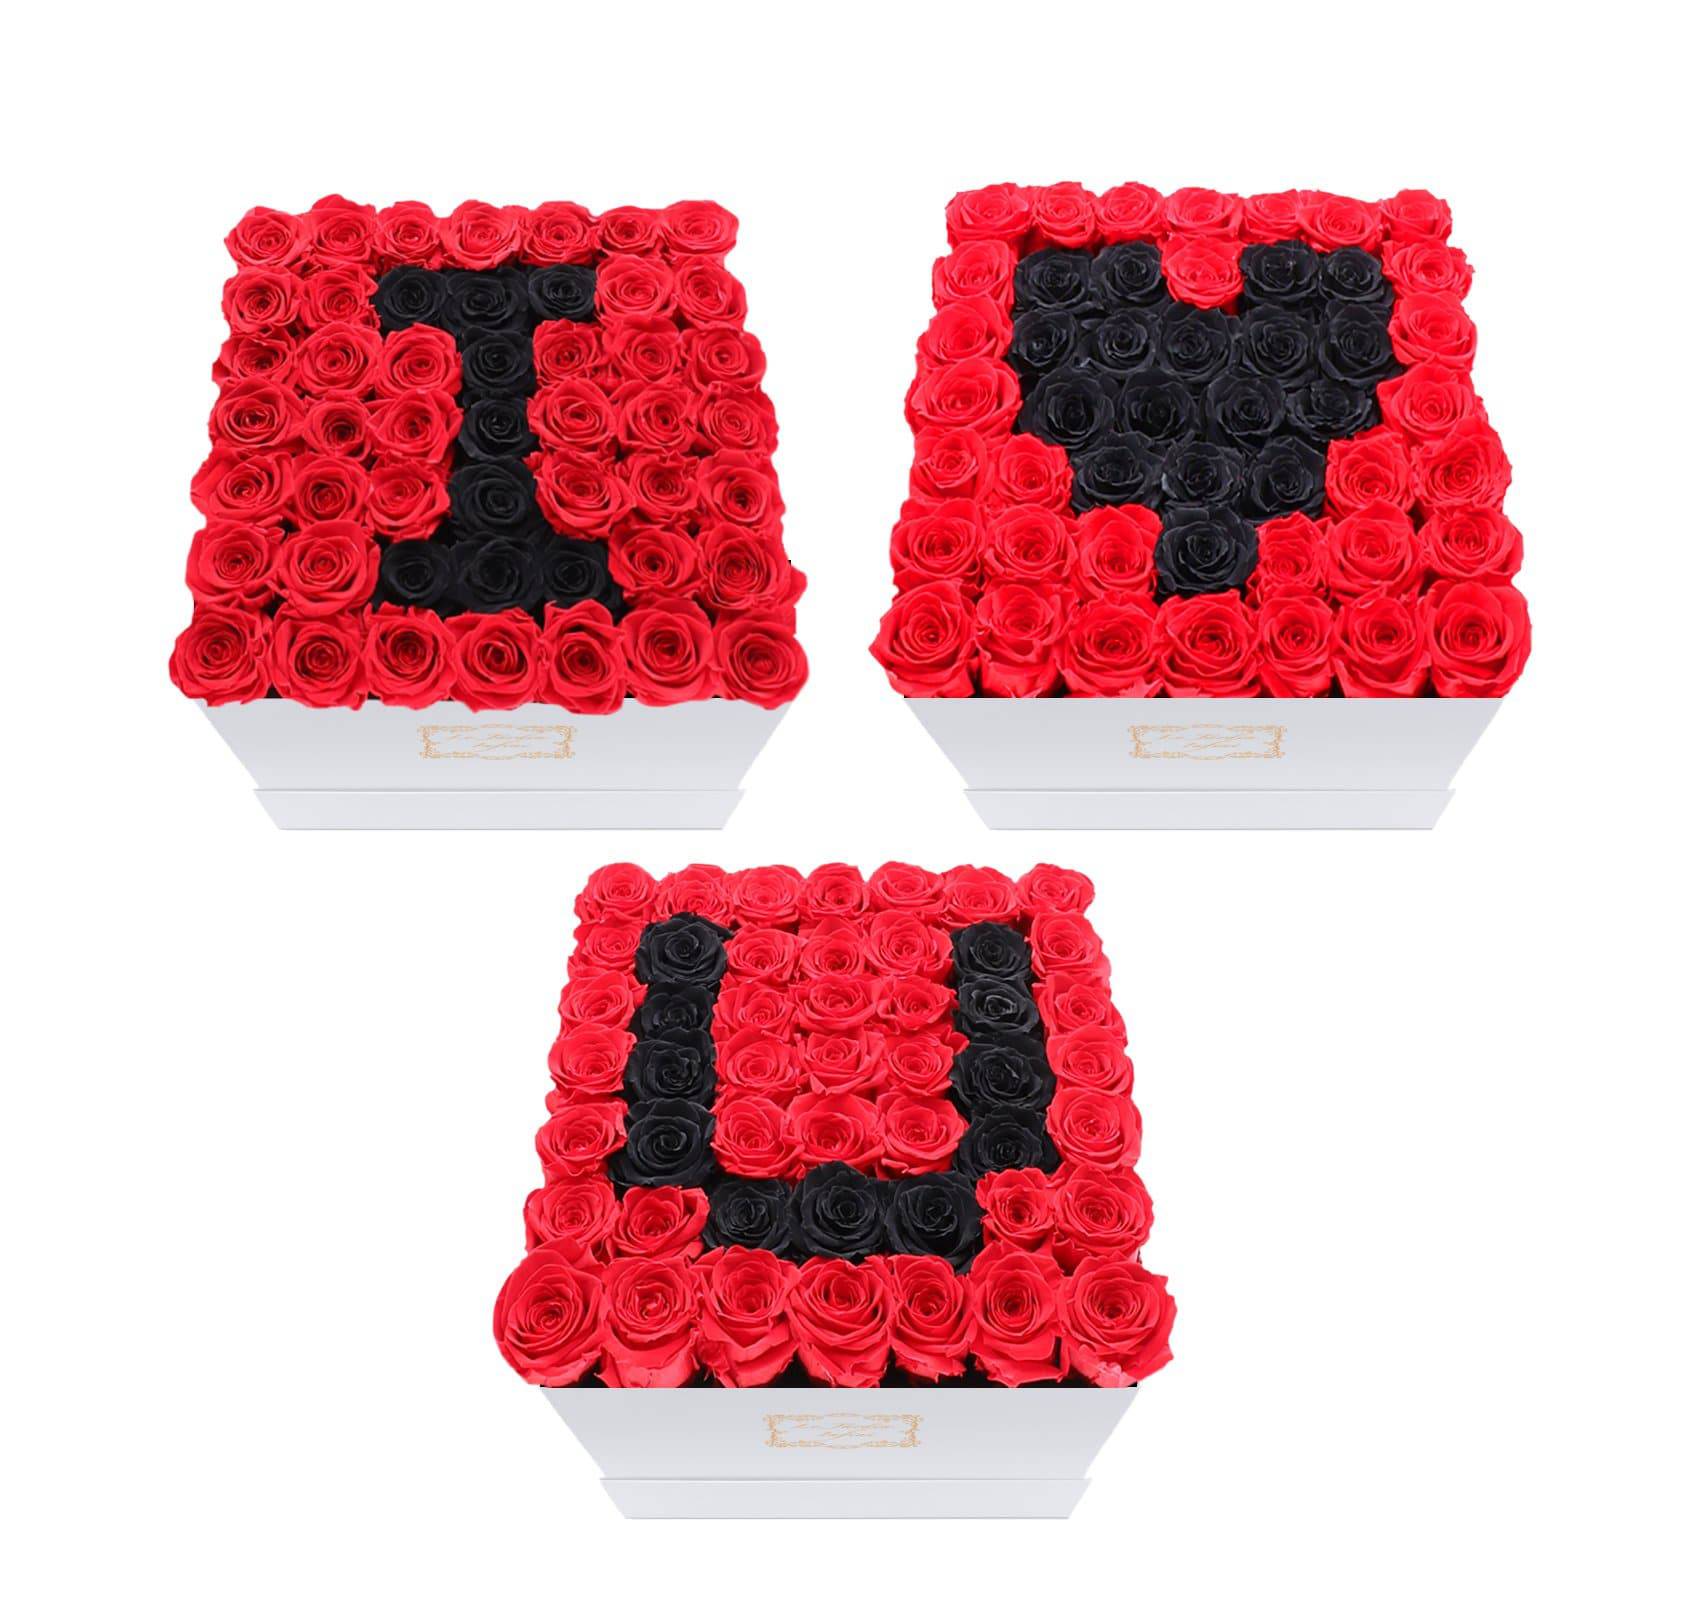 I Love U Set Black & Red Preserved Roses - Large Square Luxury White Box - Le Jardin Infini Roses in a Box